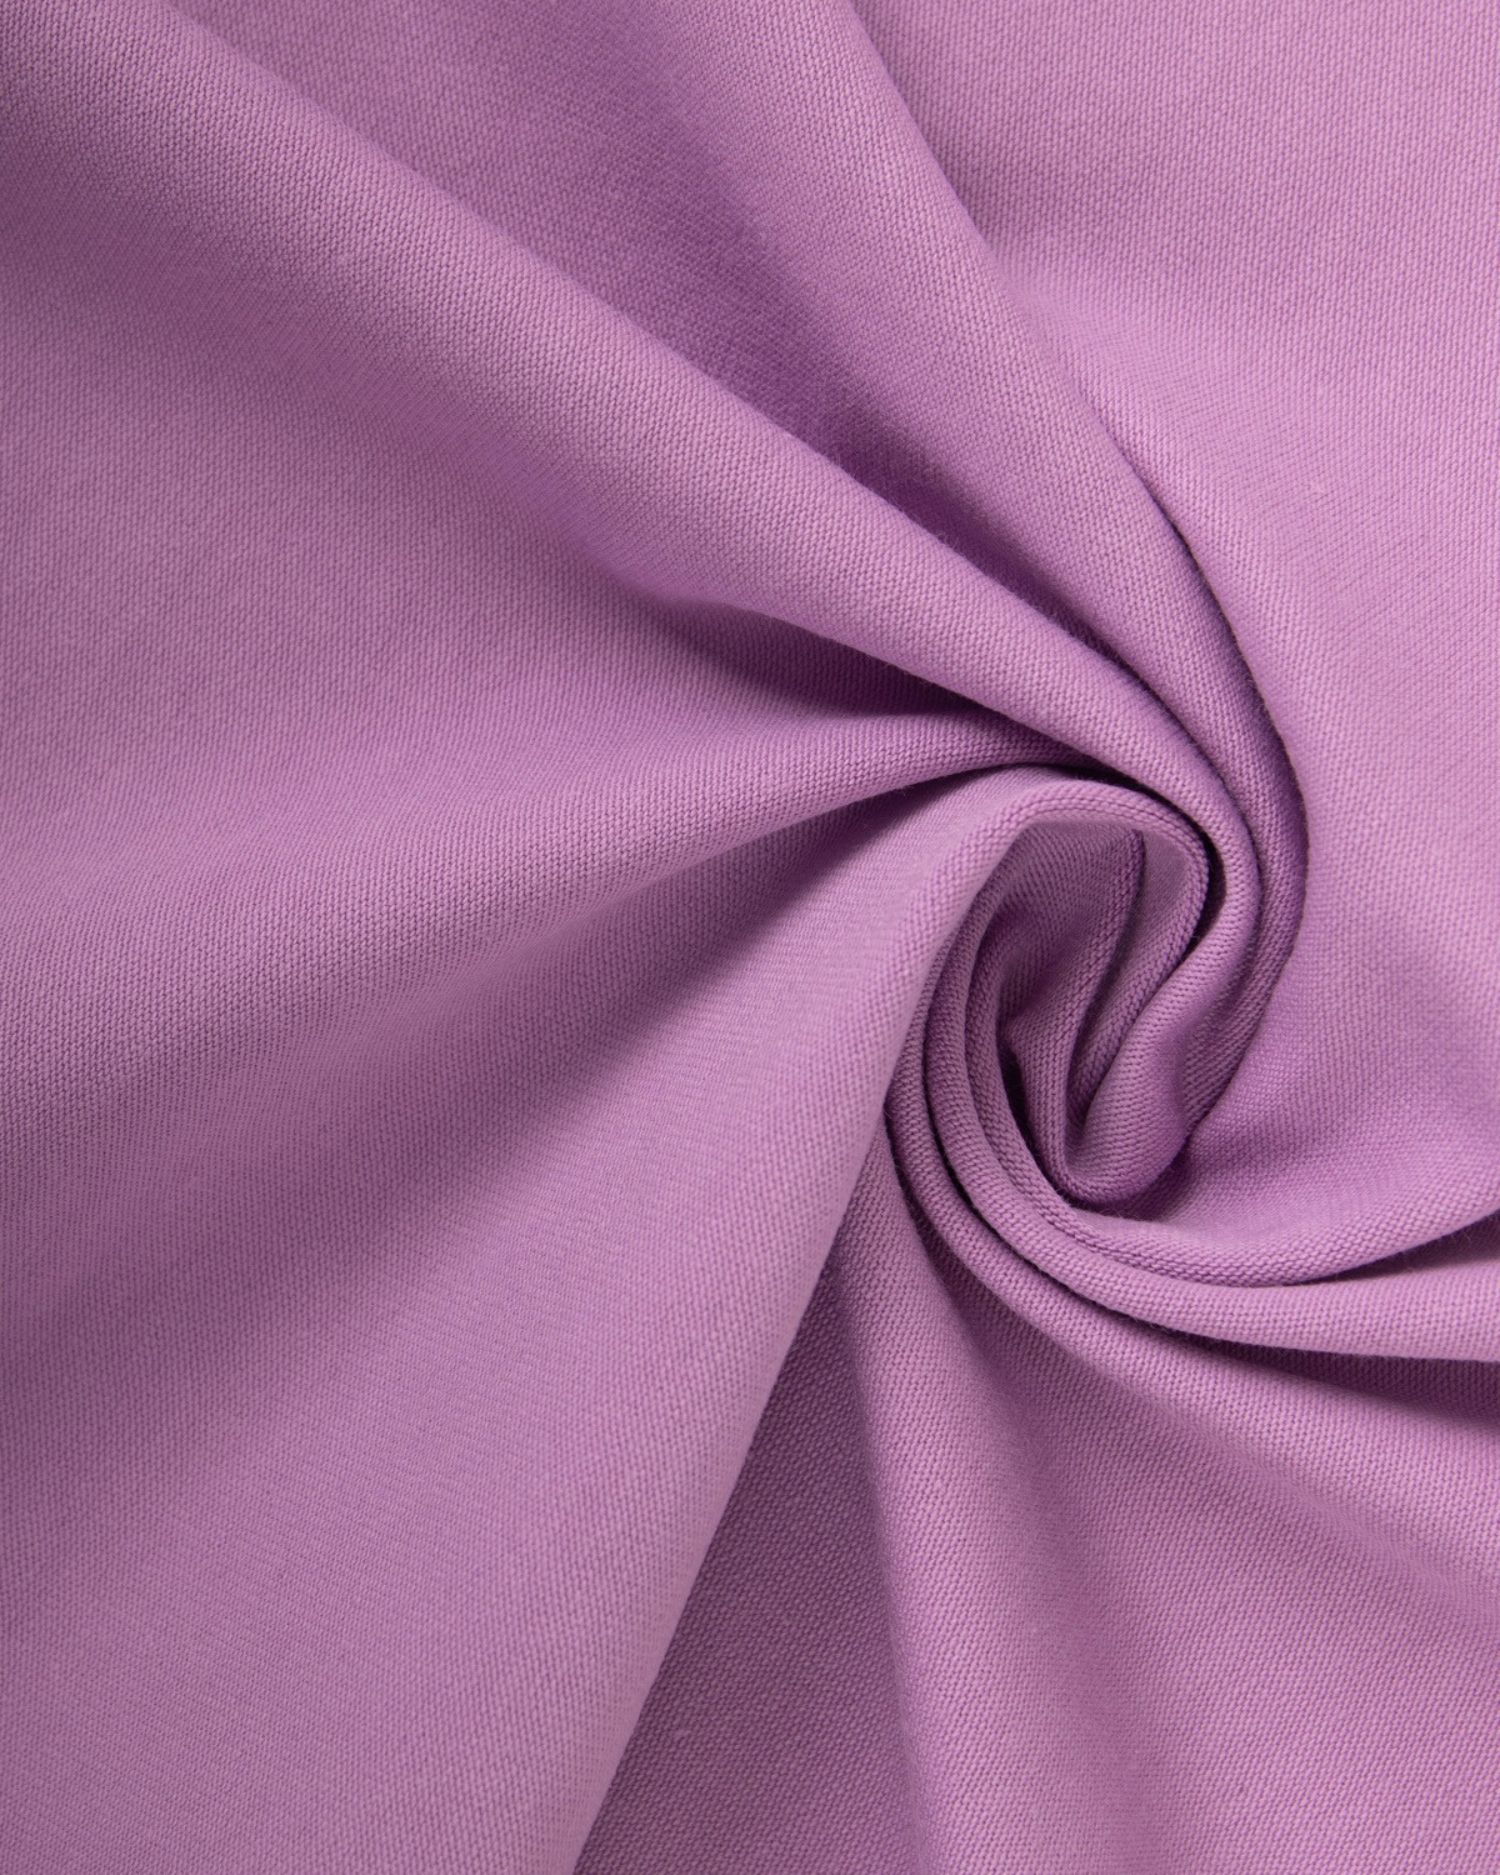 Cotton single Jersey with elastane, 1 meter, 185gr/m2, purple